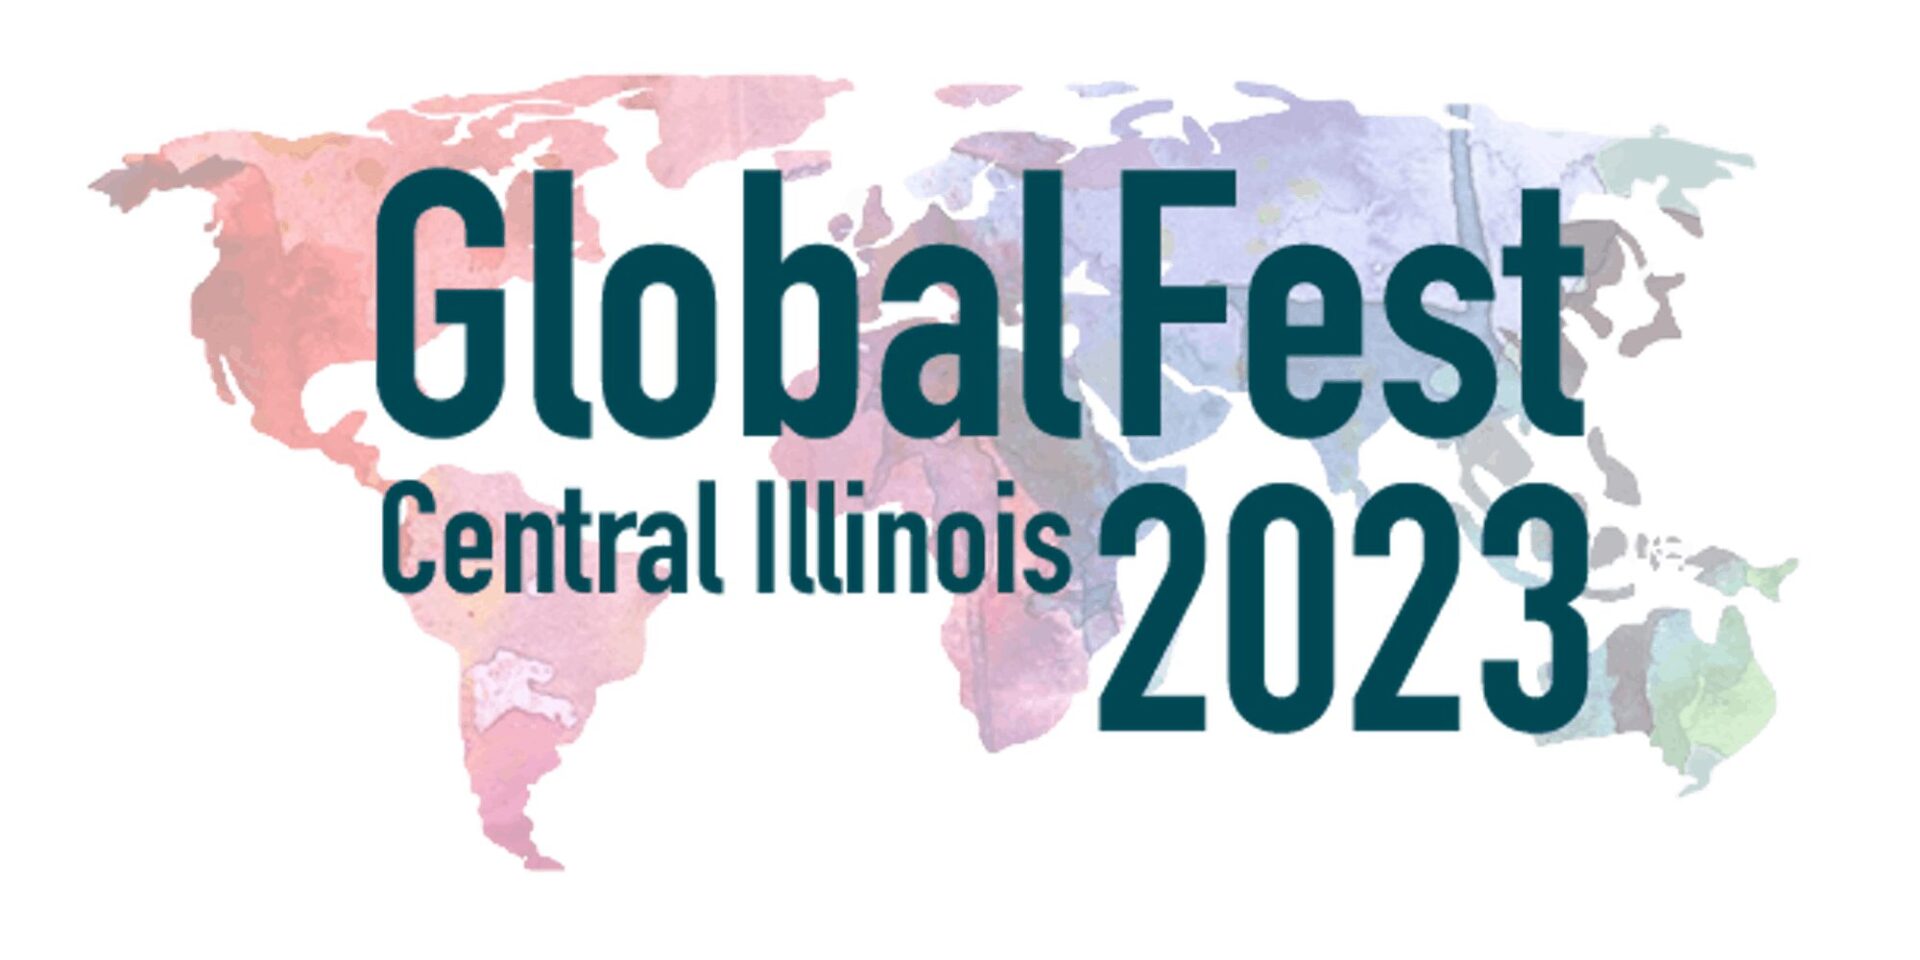 Globalfest Central Illinois 2023 Banner